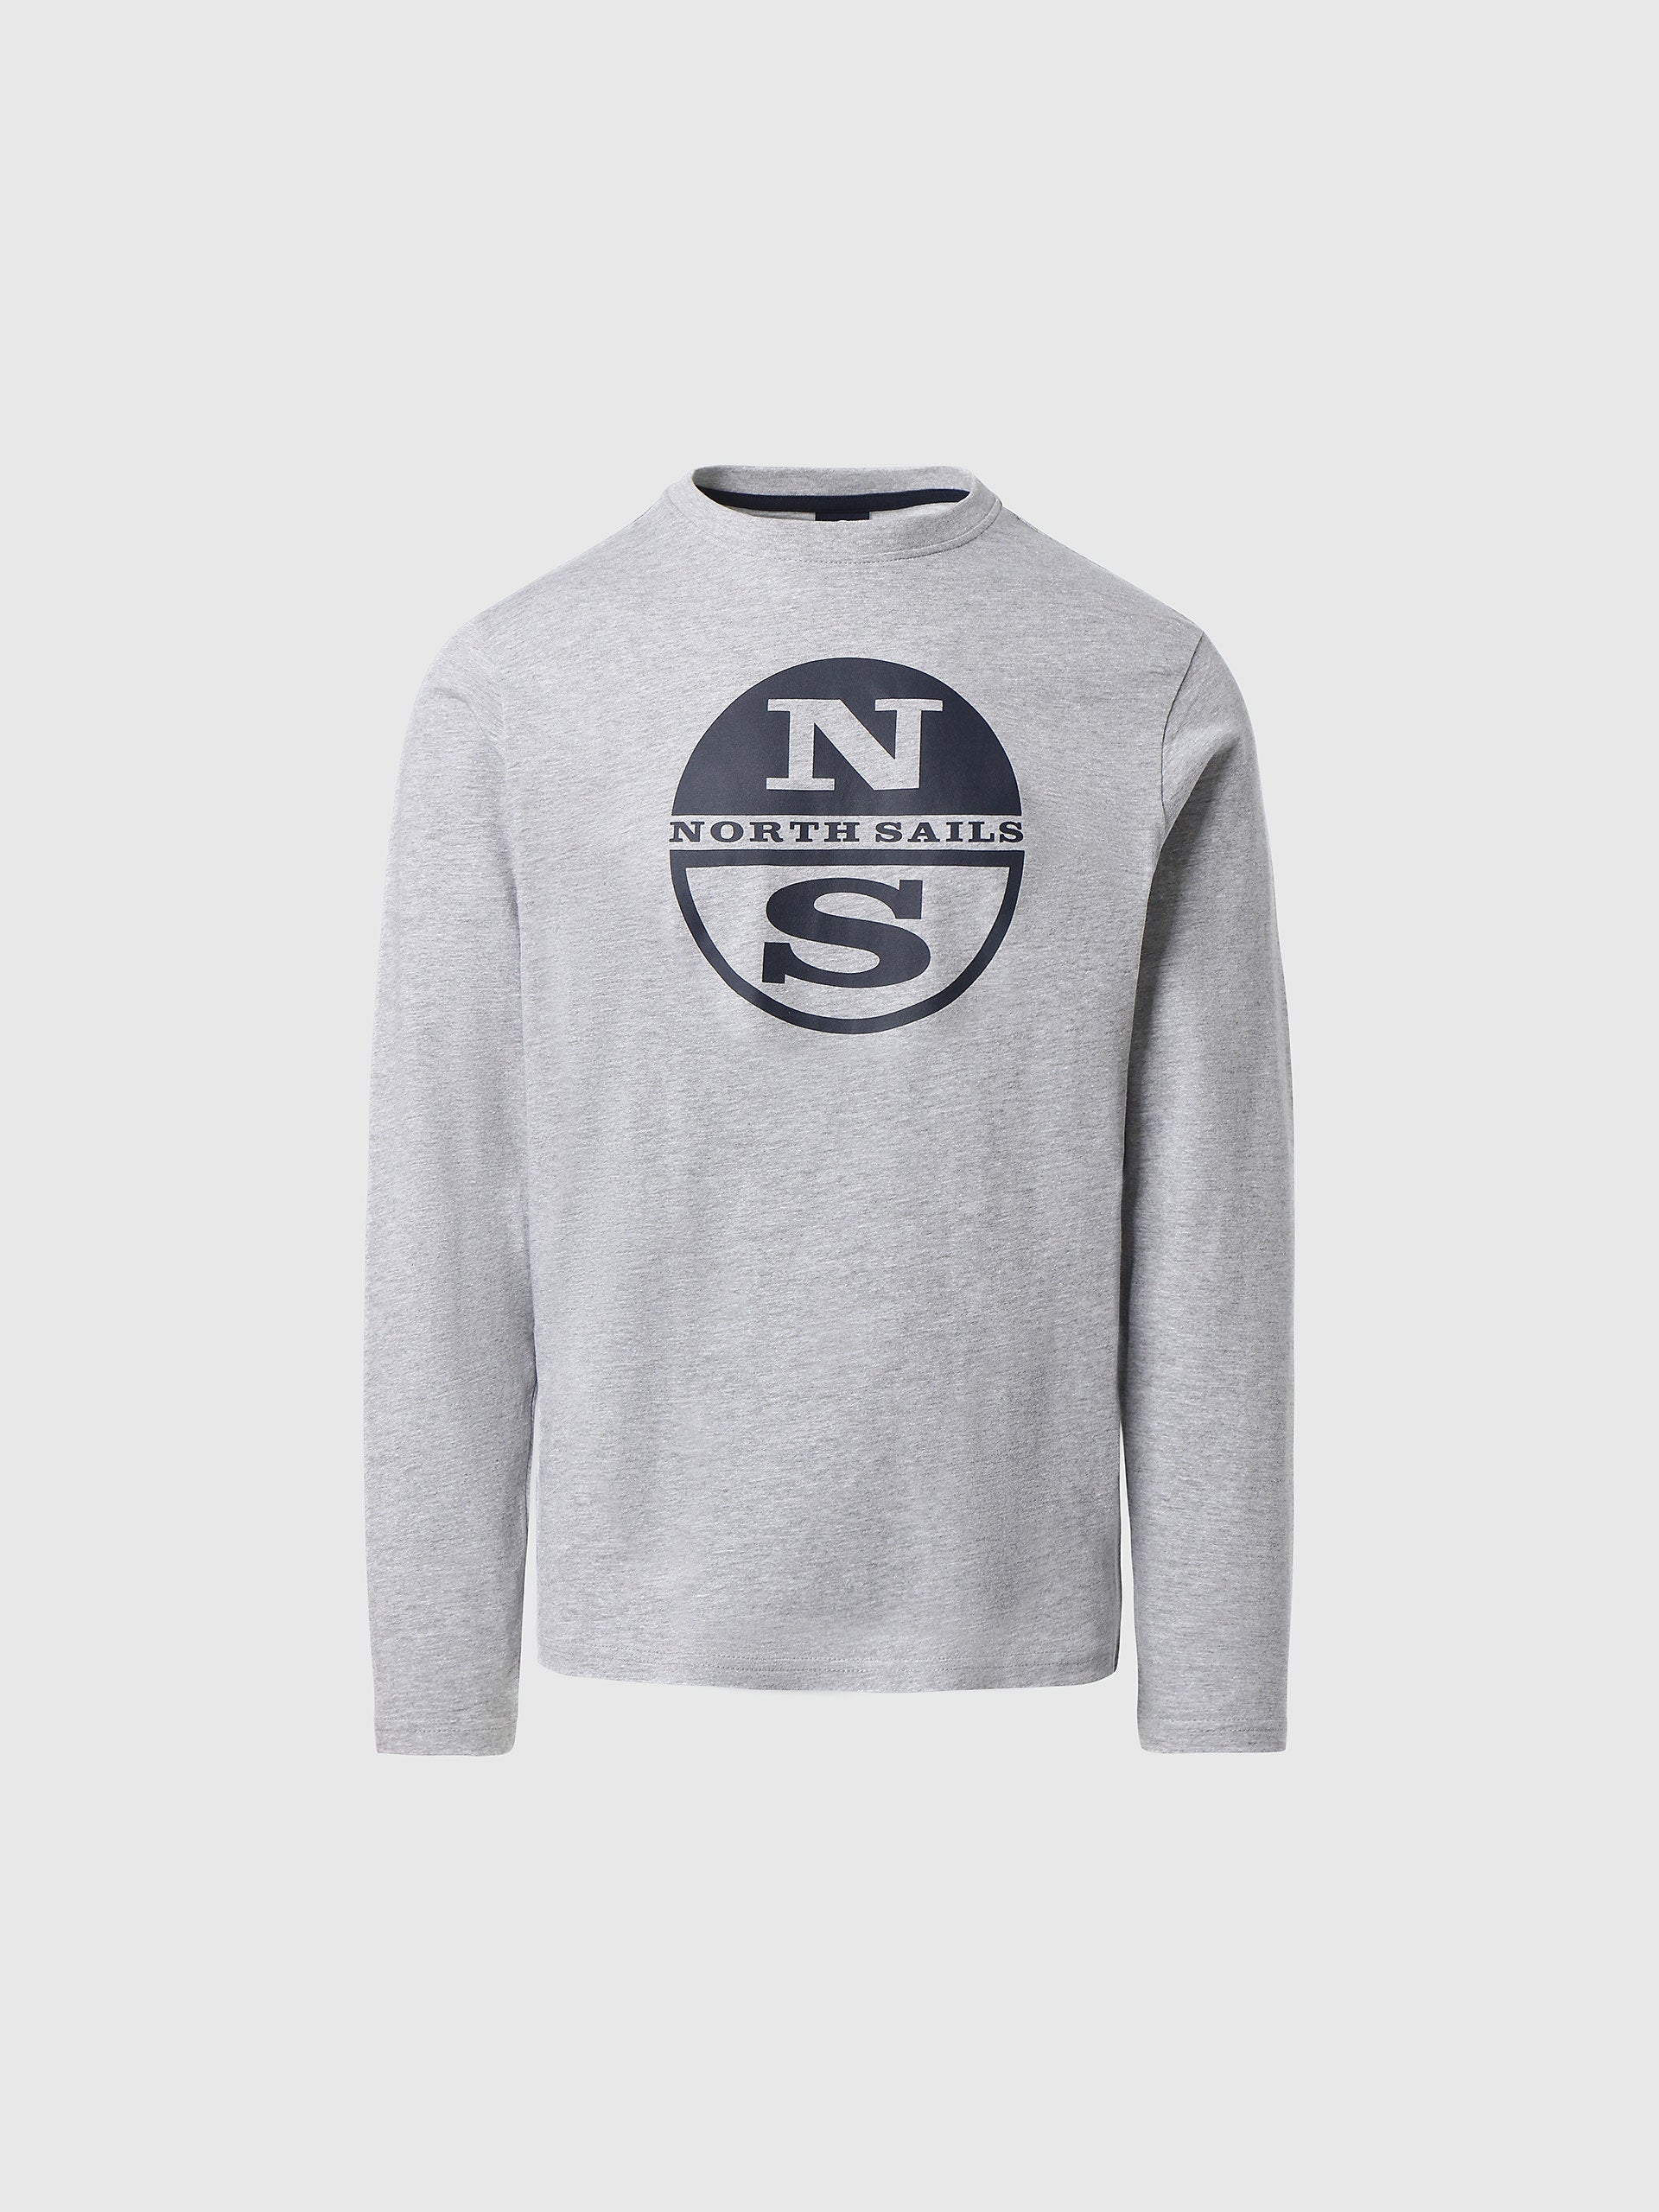 North Sails - Organic jersey T-shirtNorth SailsMedium grey melangeXL